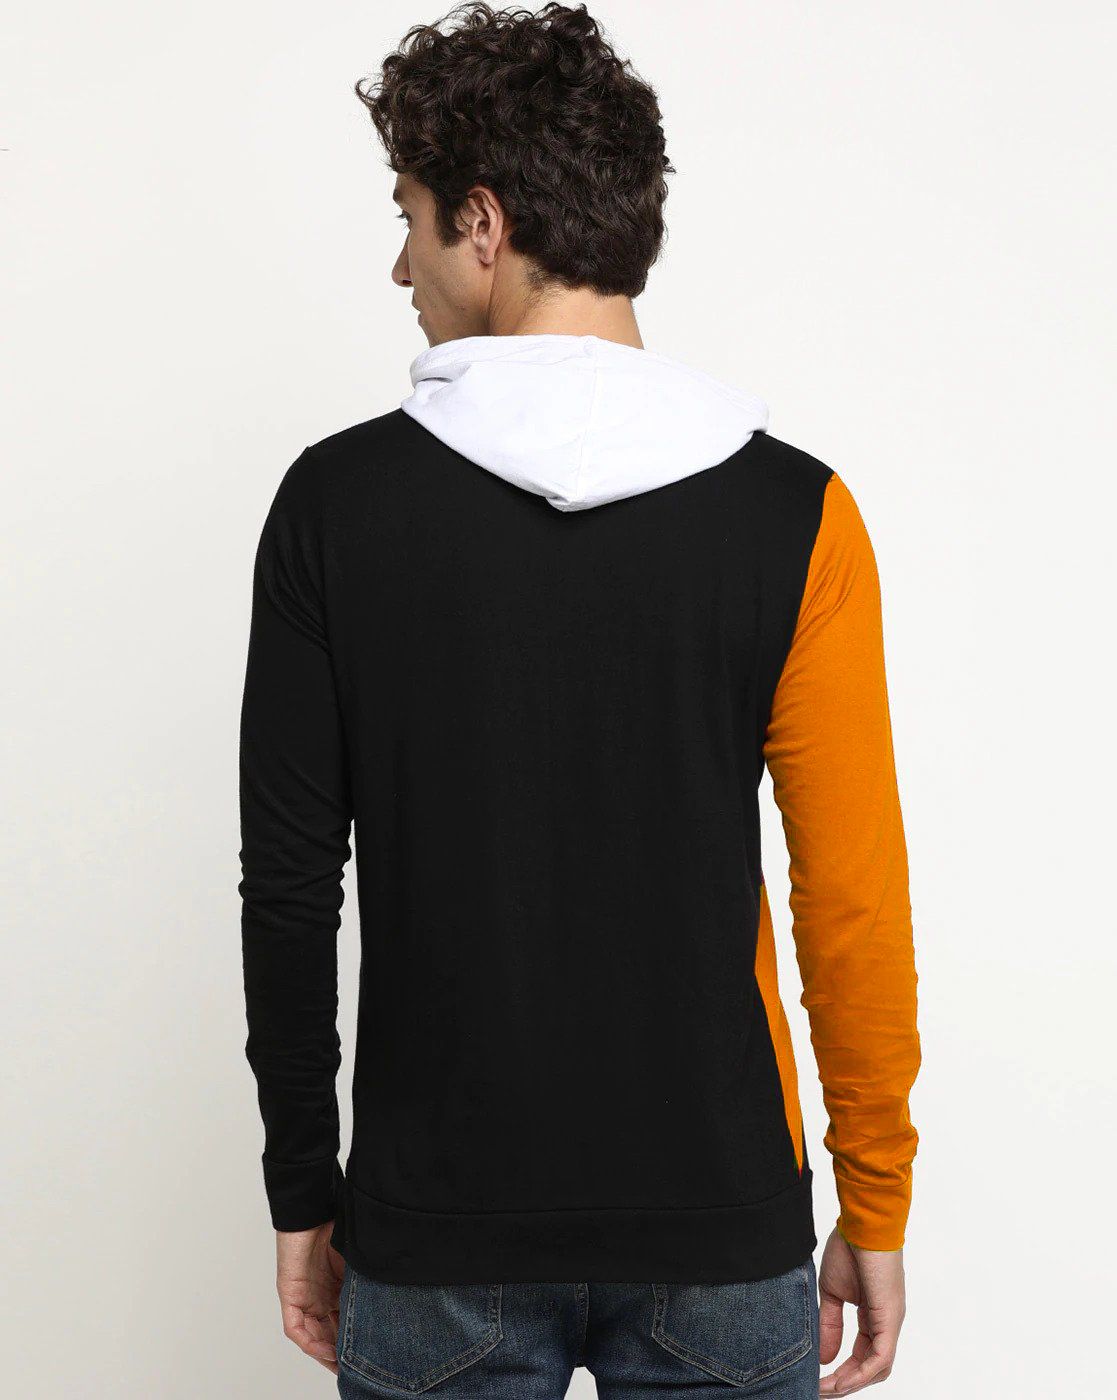 DS Men's Cotton Blend Sweatshirt